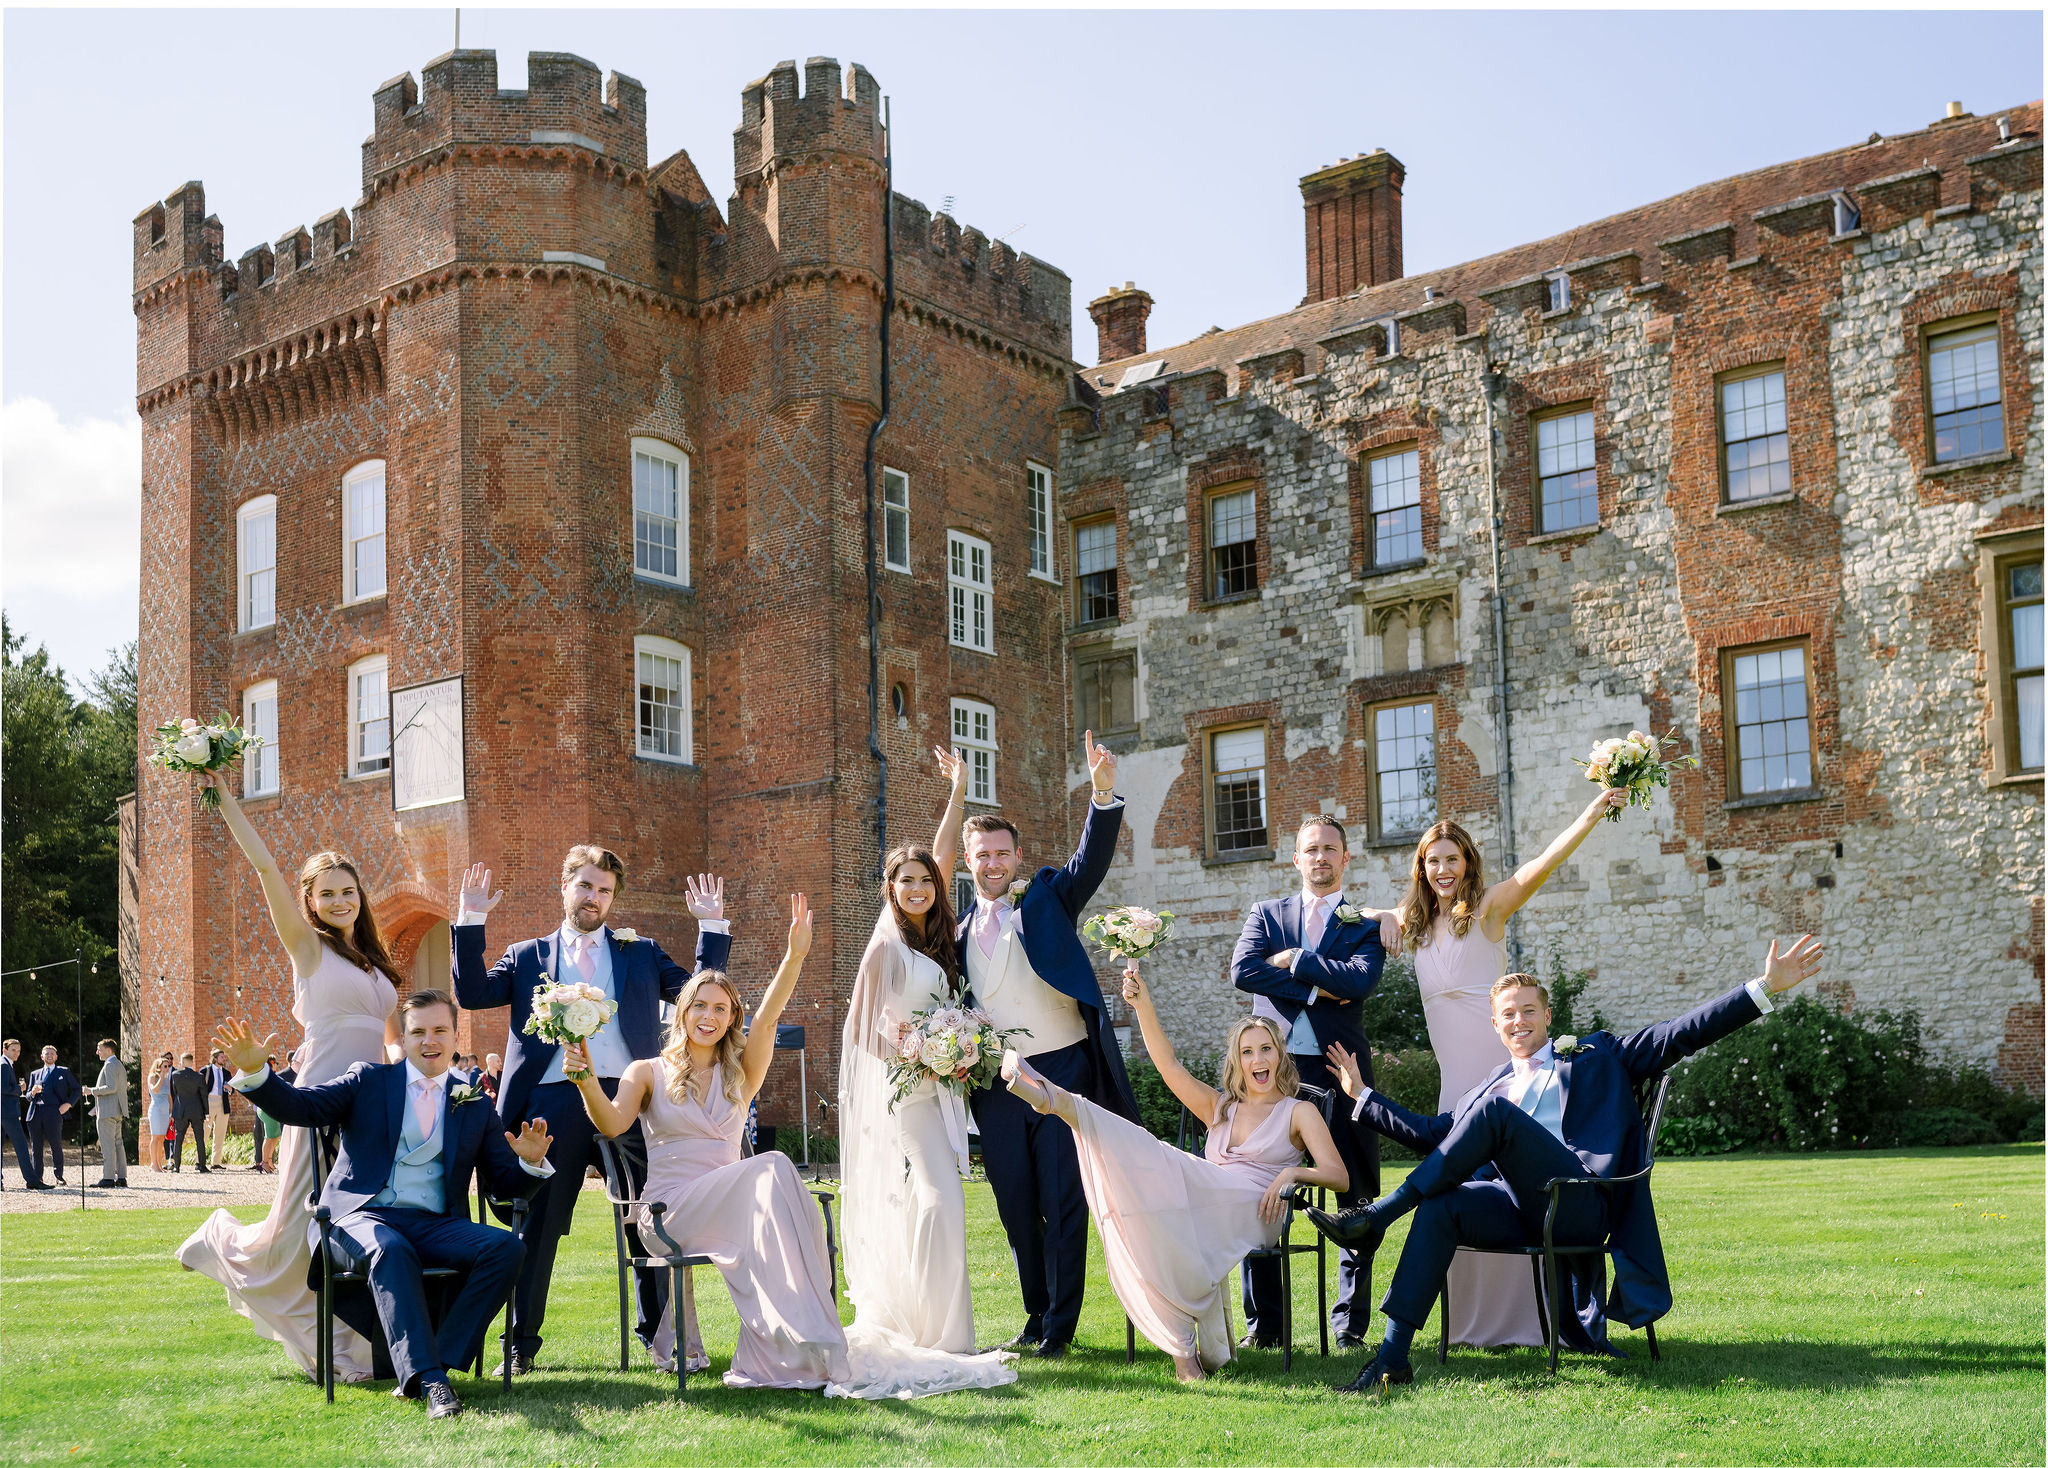 Fun wedding photography at Farnham Castle in Surrey